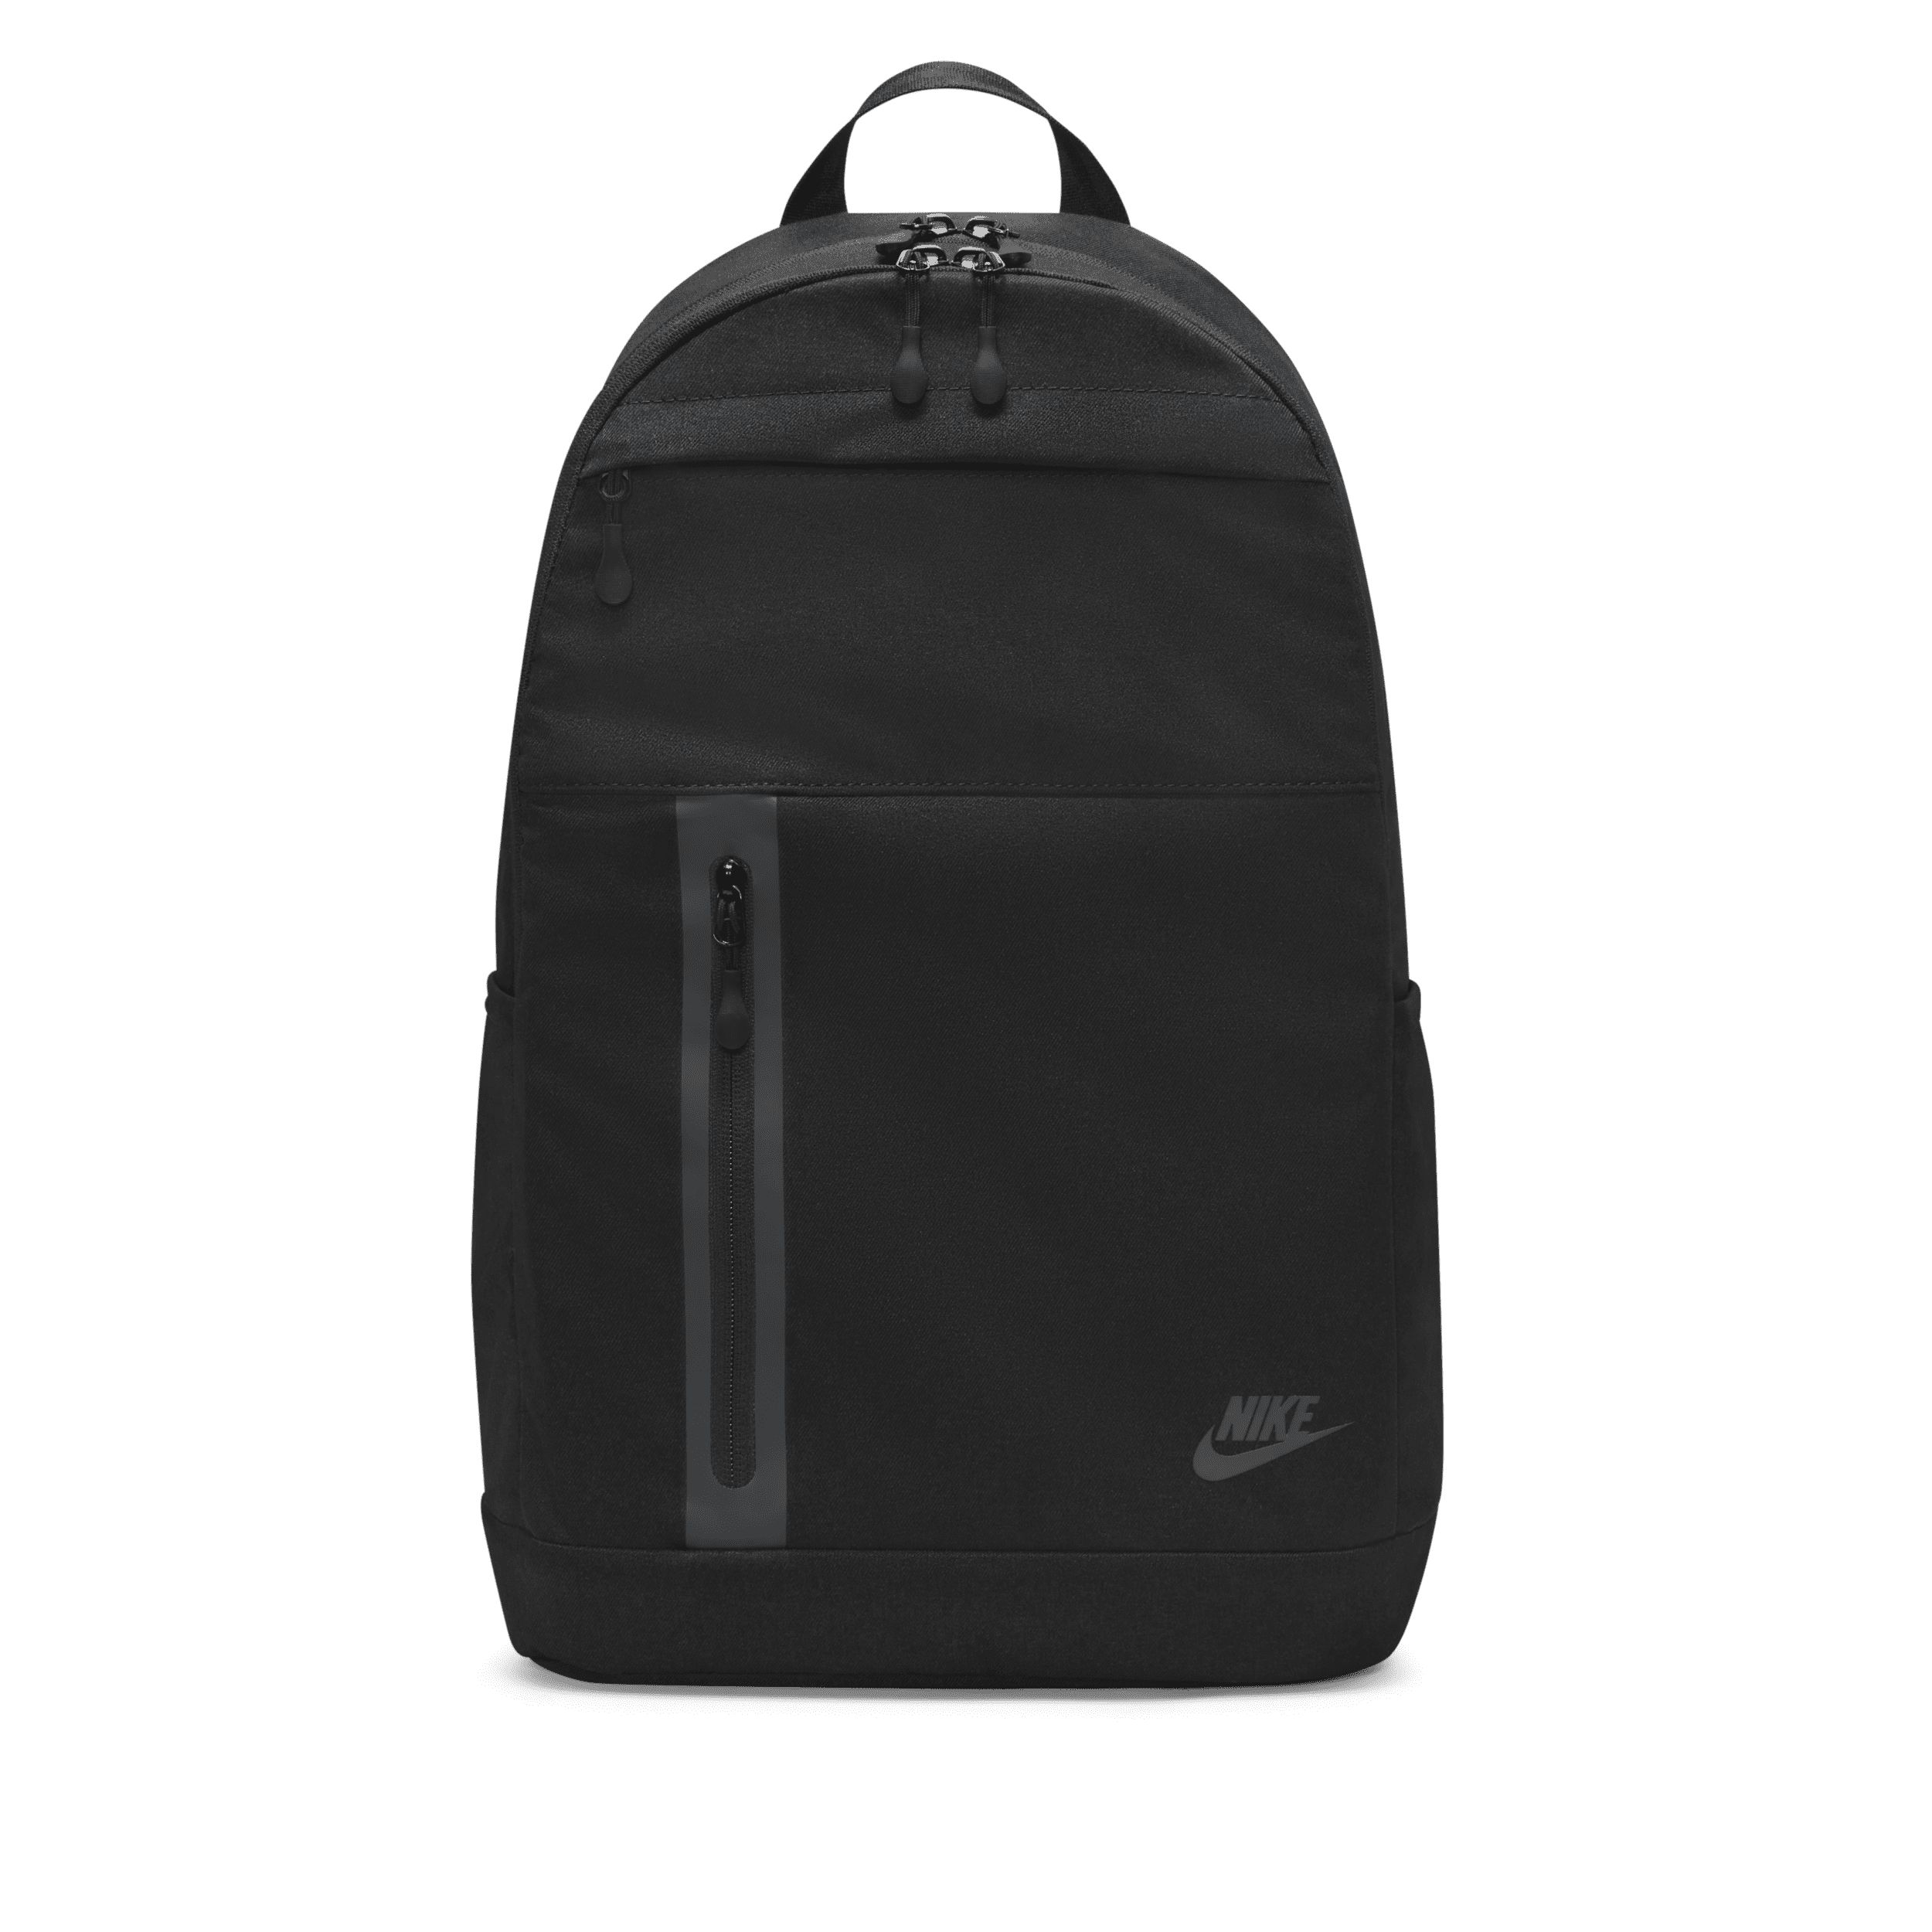 Zaino Nike Elemental Premium (21 l) - Nero